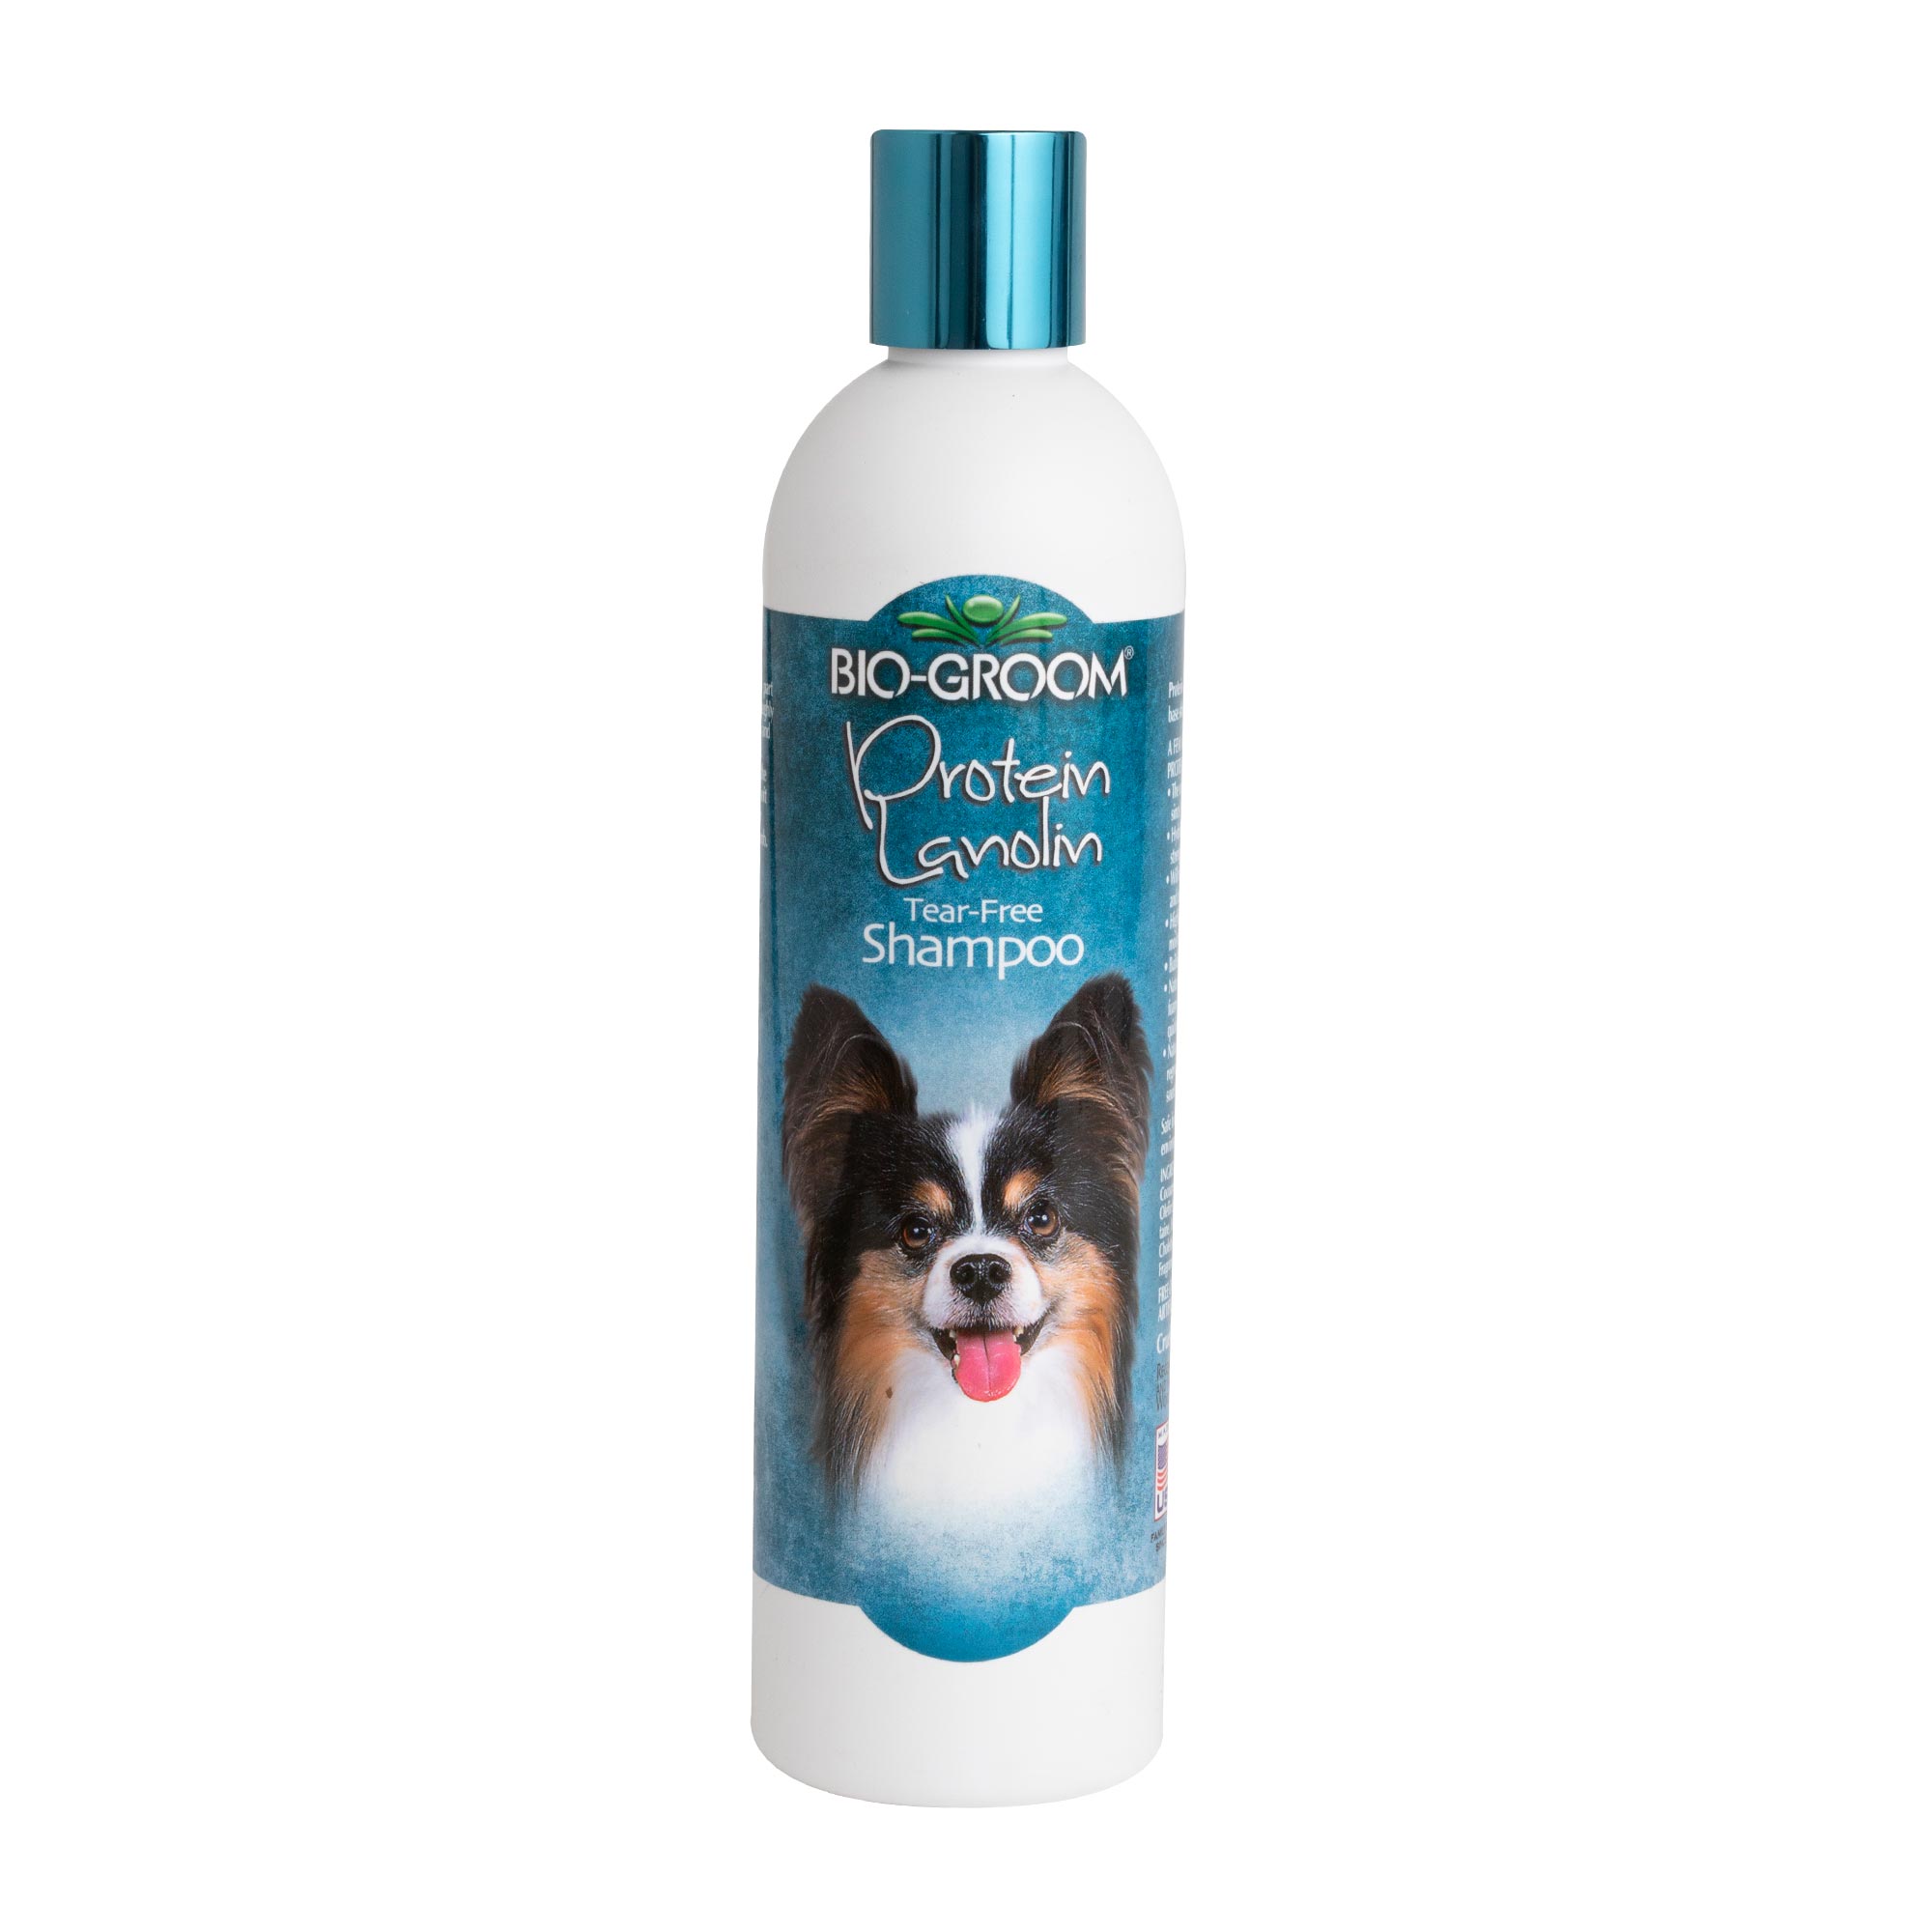 Case Pack - Groom'n Fresh™ Odor Eliminating, Sulfate-Free Dog Shampoo